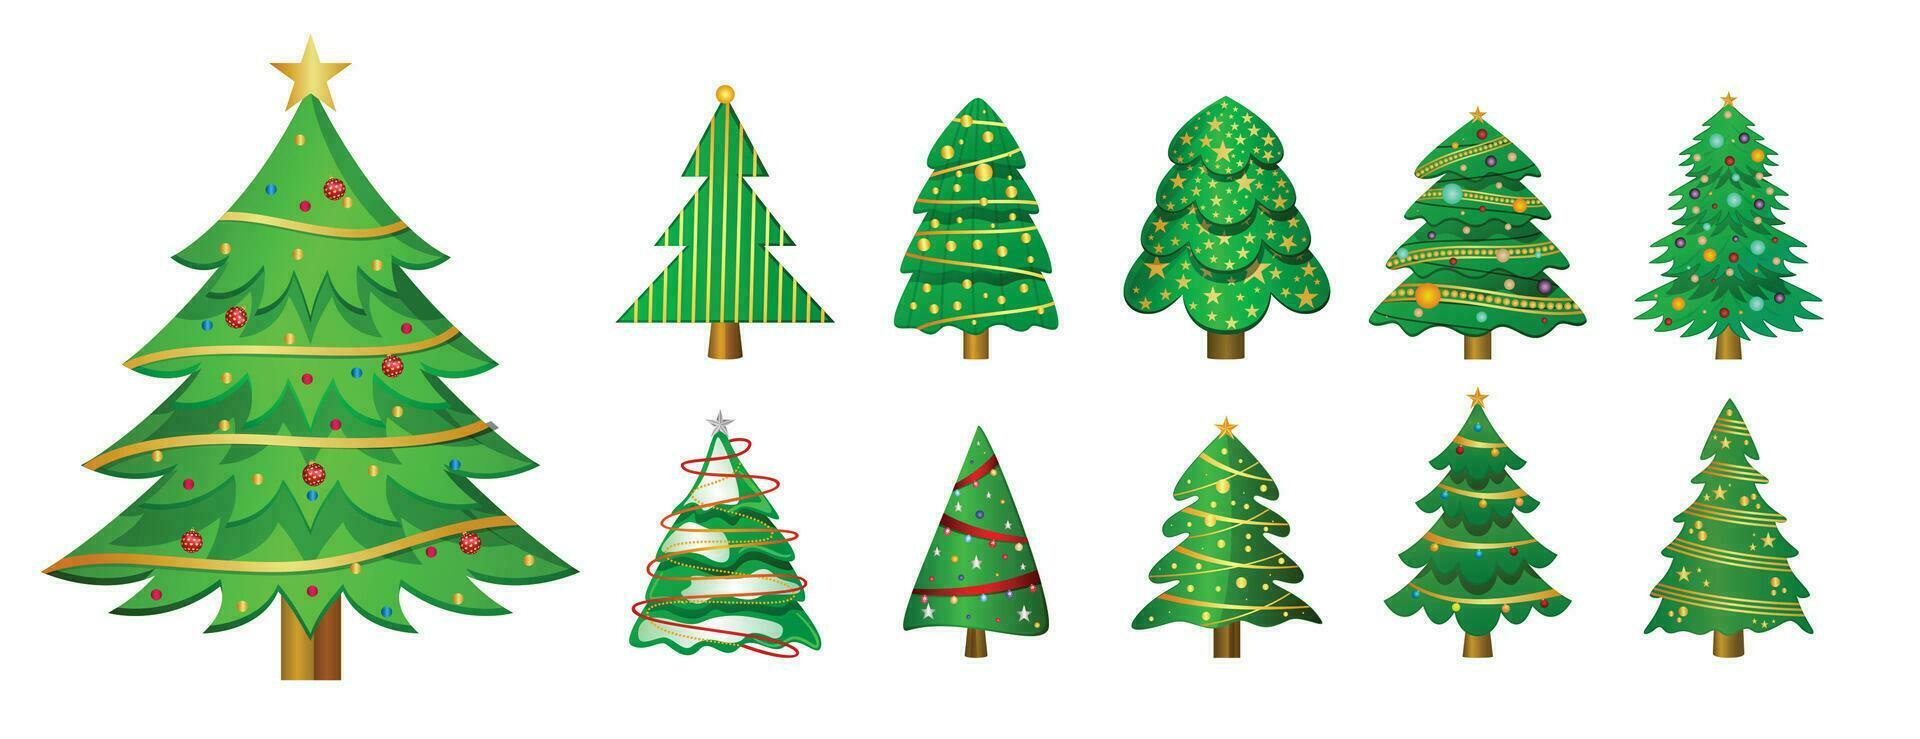 set of green christmas tree symbols for xmas decoration design vector